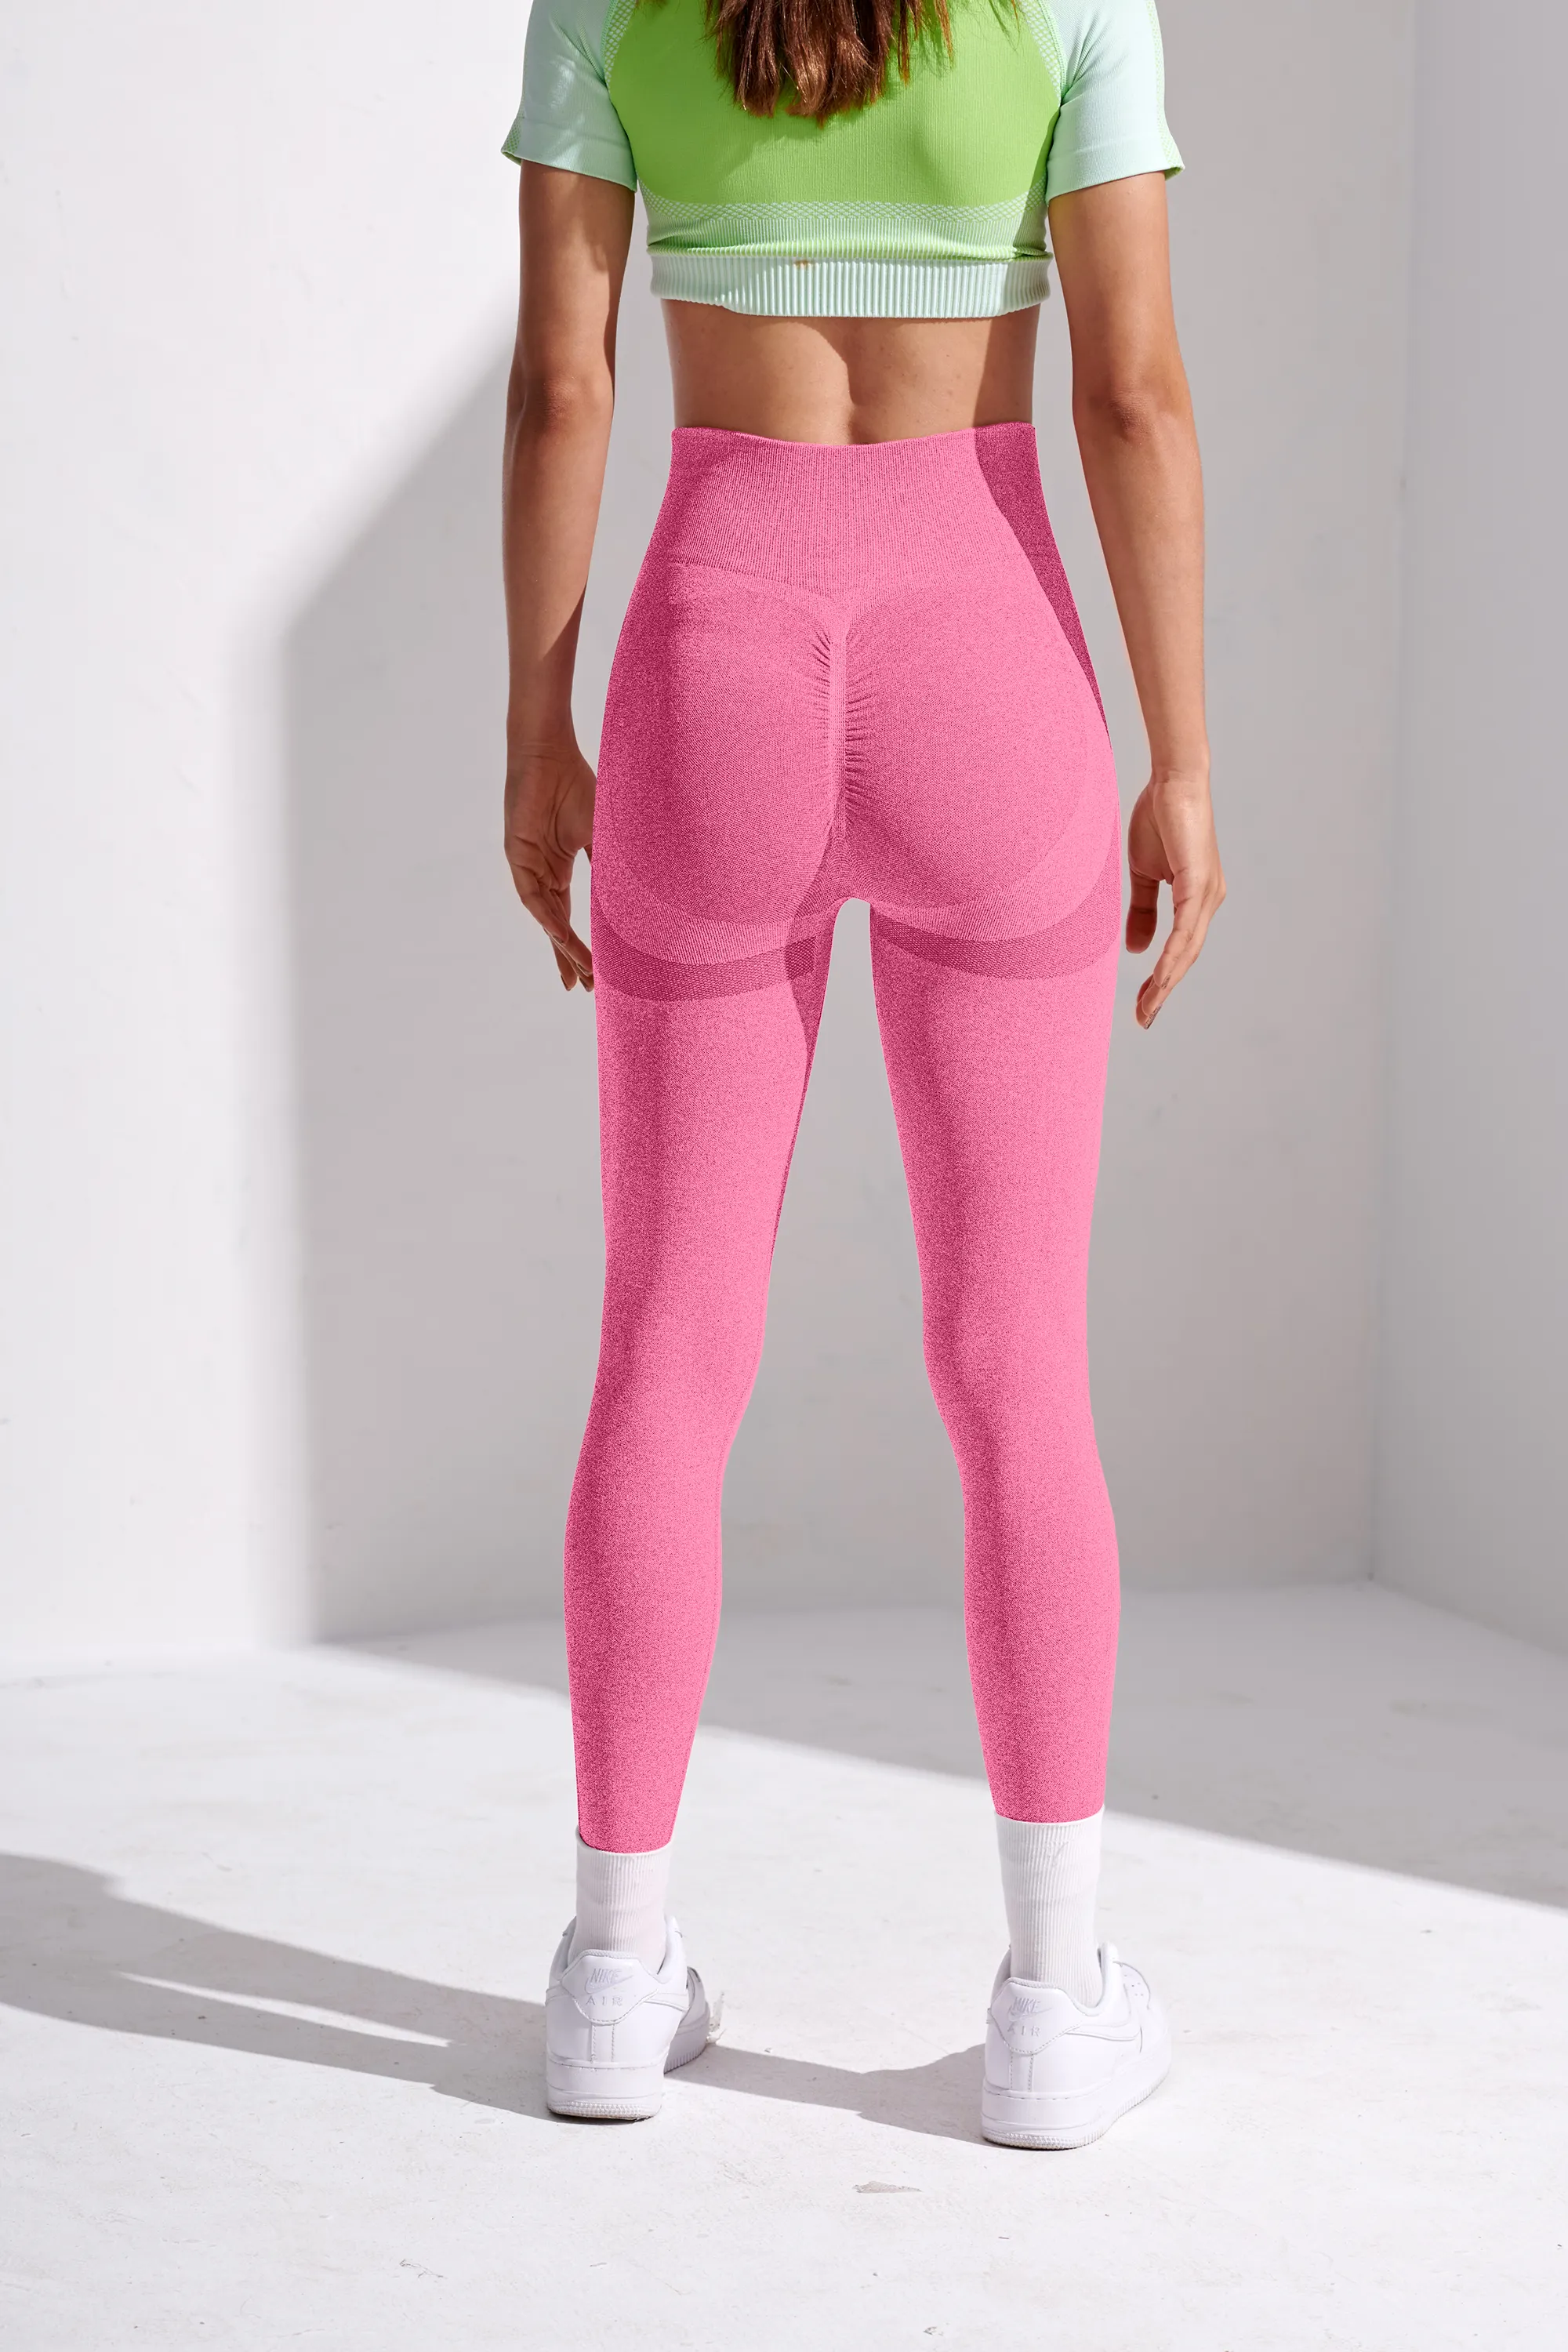 Spot Wholesale 6 Color Ladies High Waist Breathable Sport Pants Fitness Yoga Legging